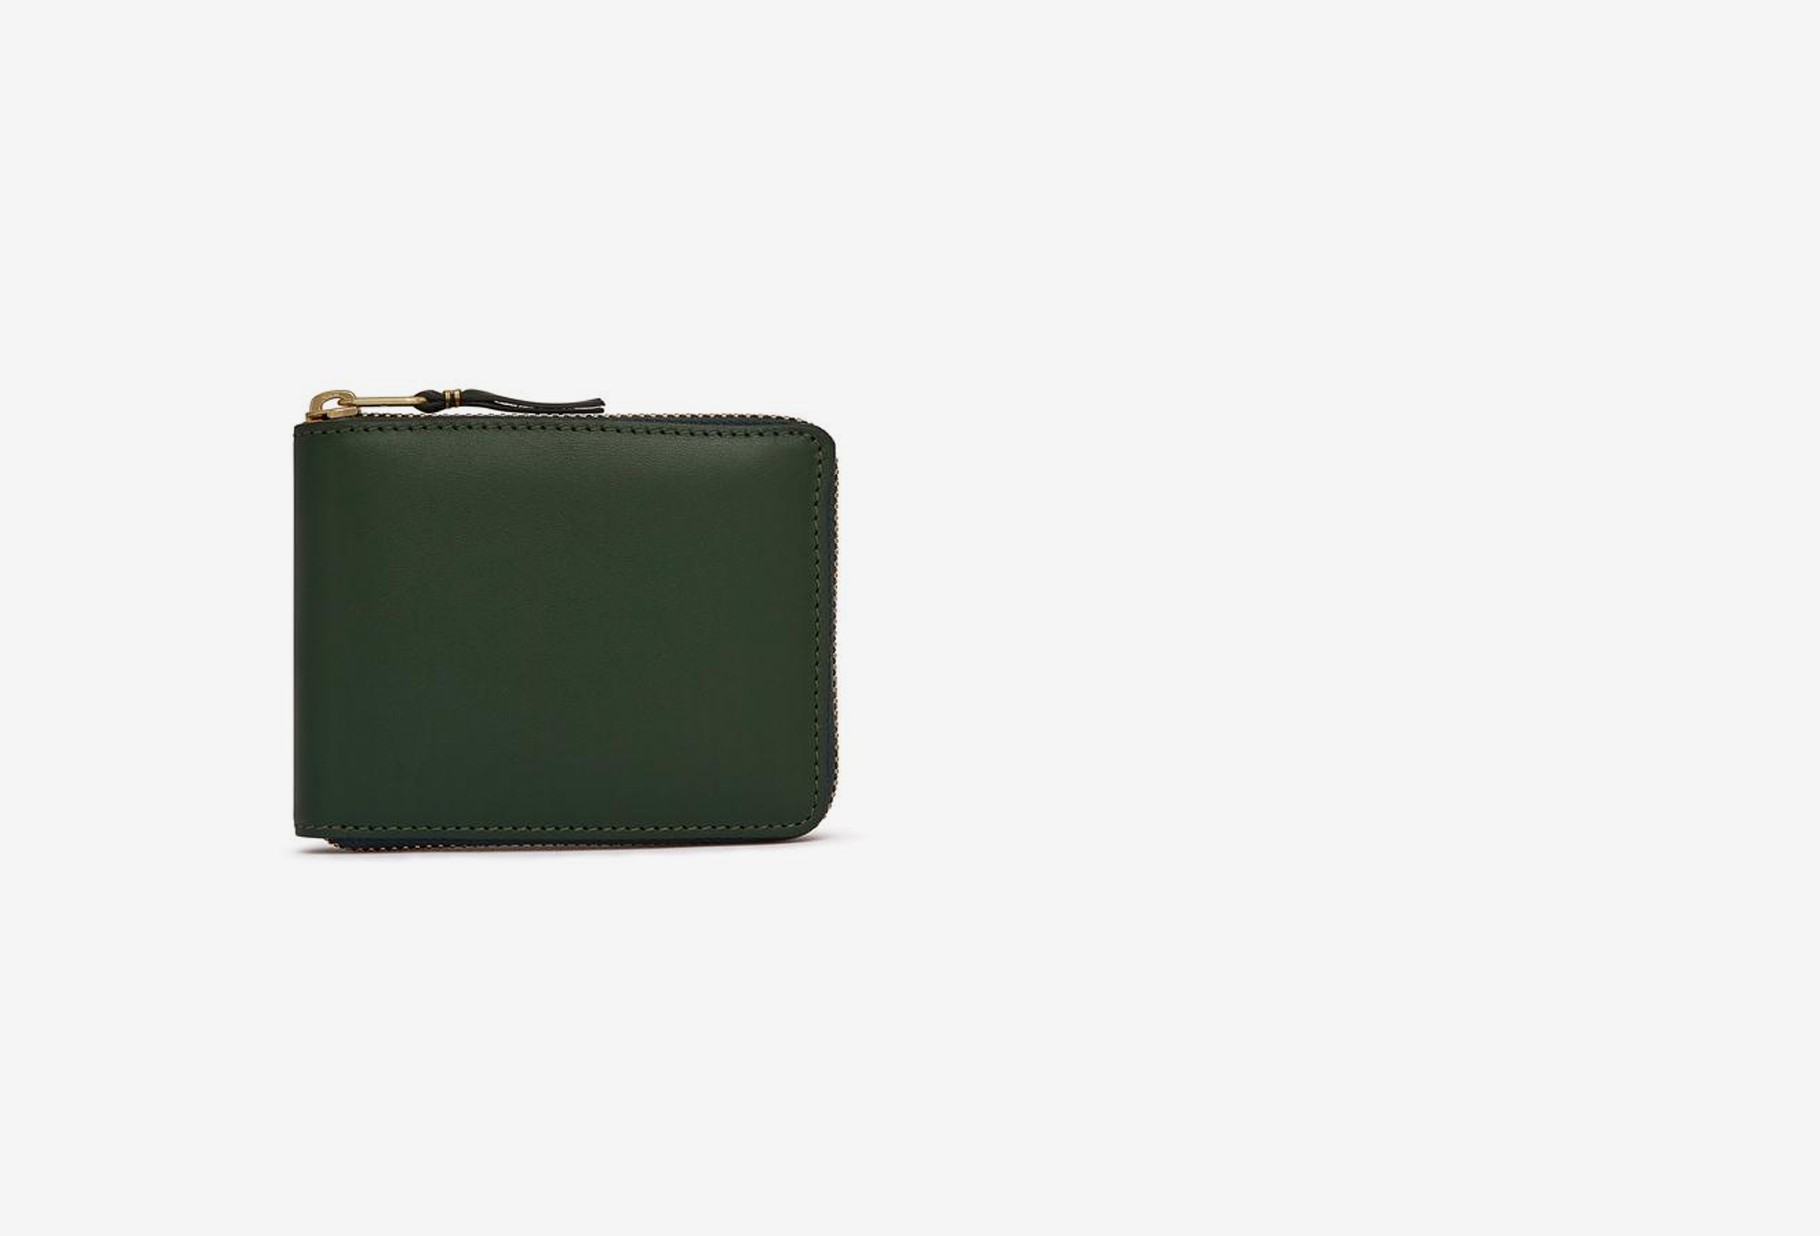 COMME DES GARÇONS WALLETS / Cdg leather wallet classic Bottle green